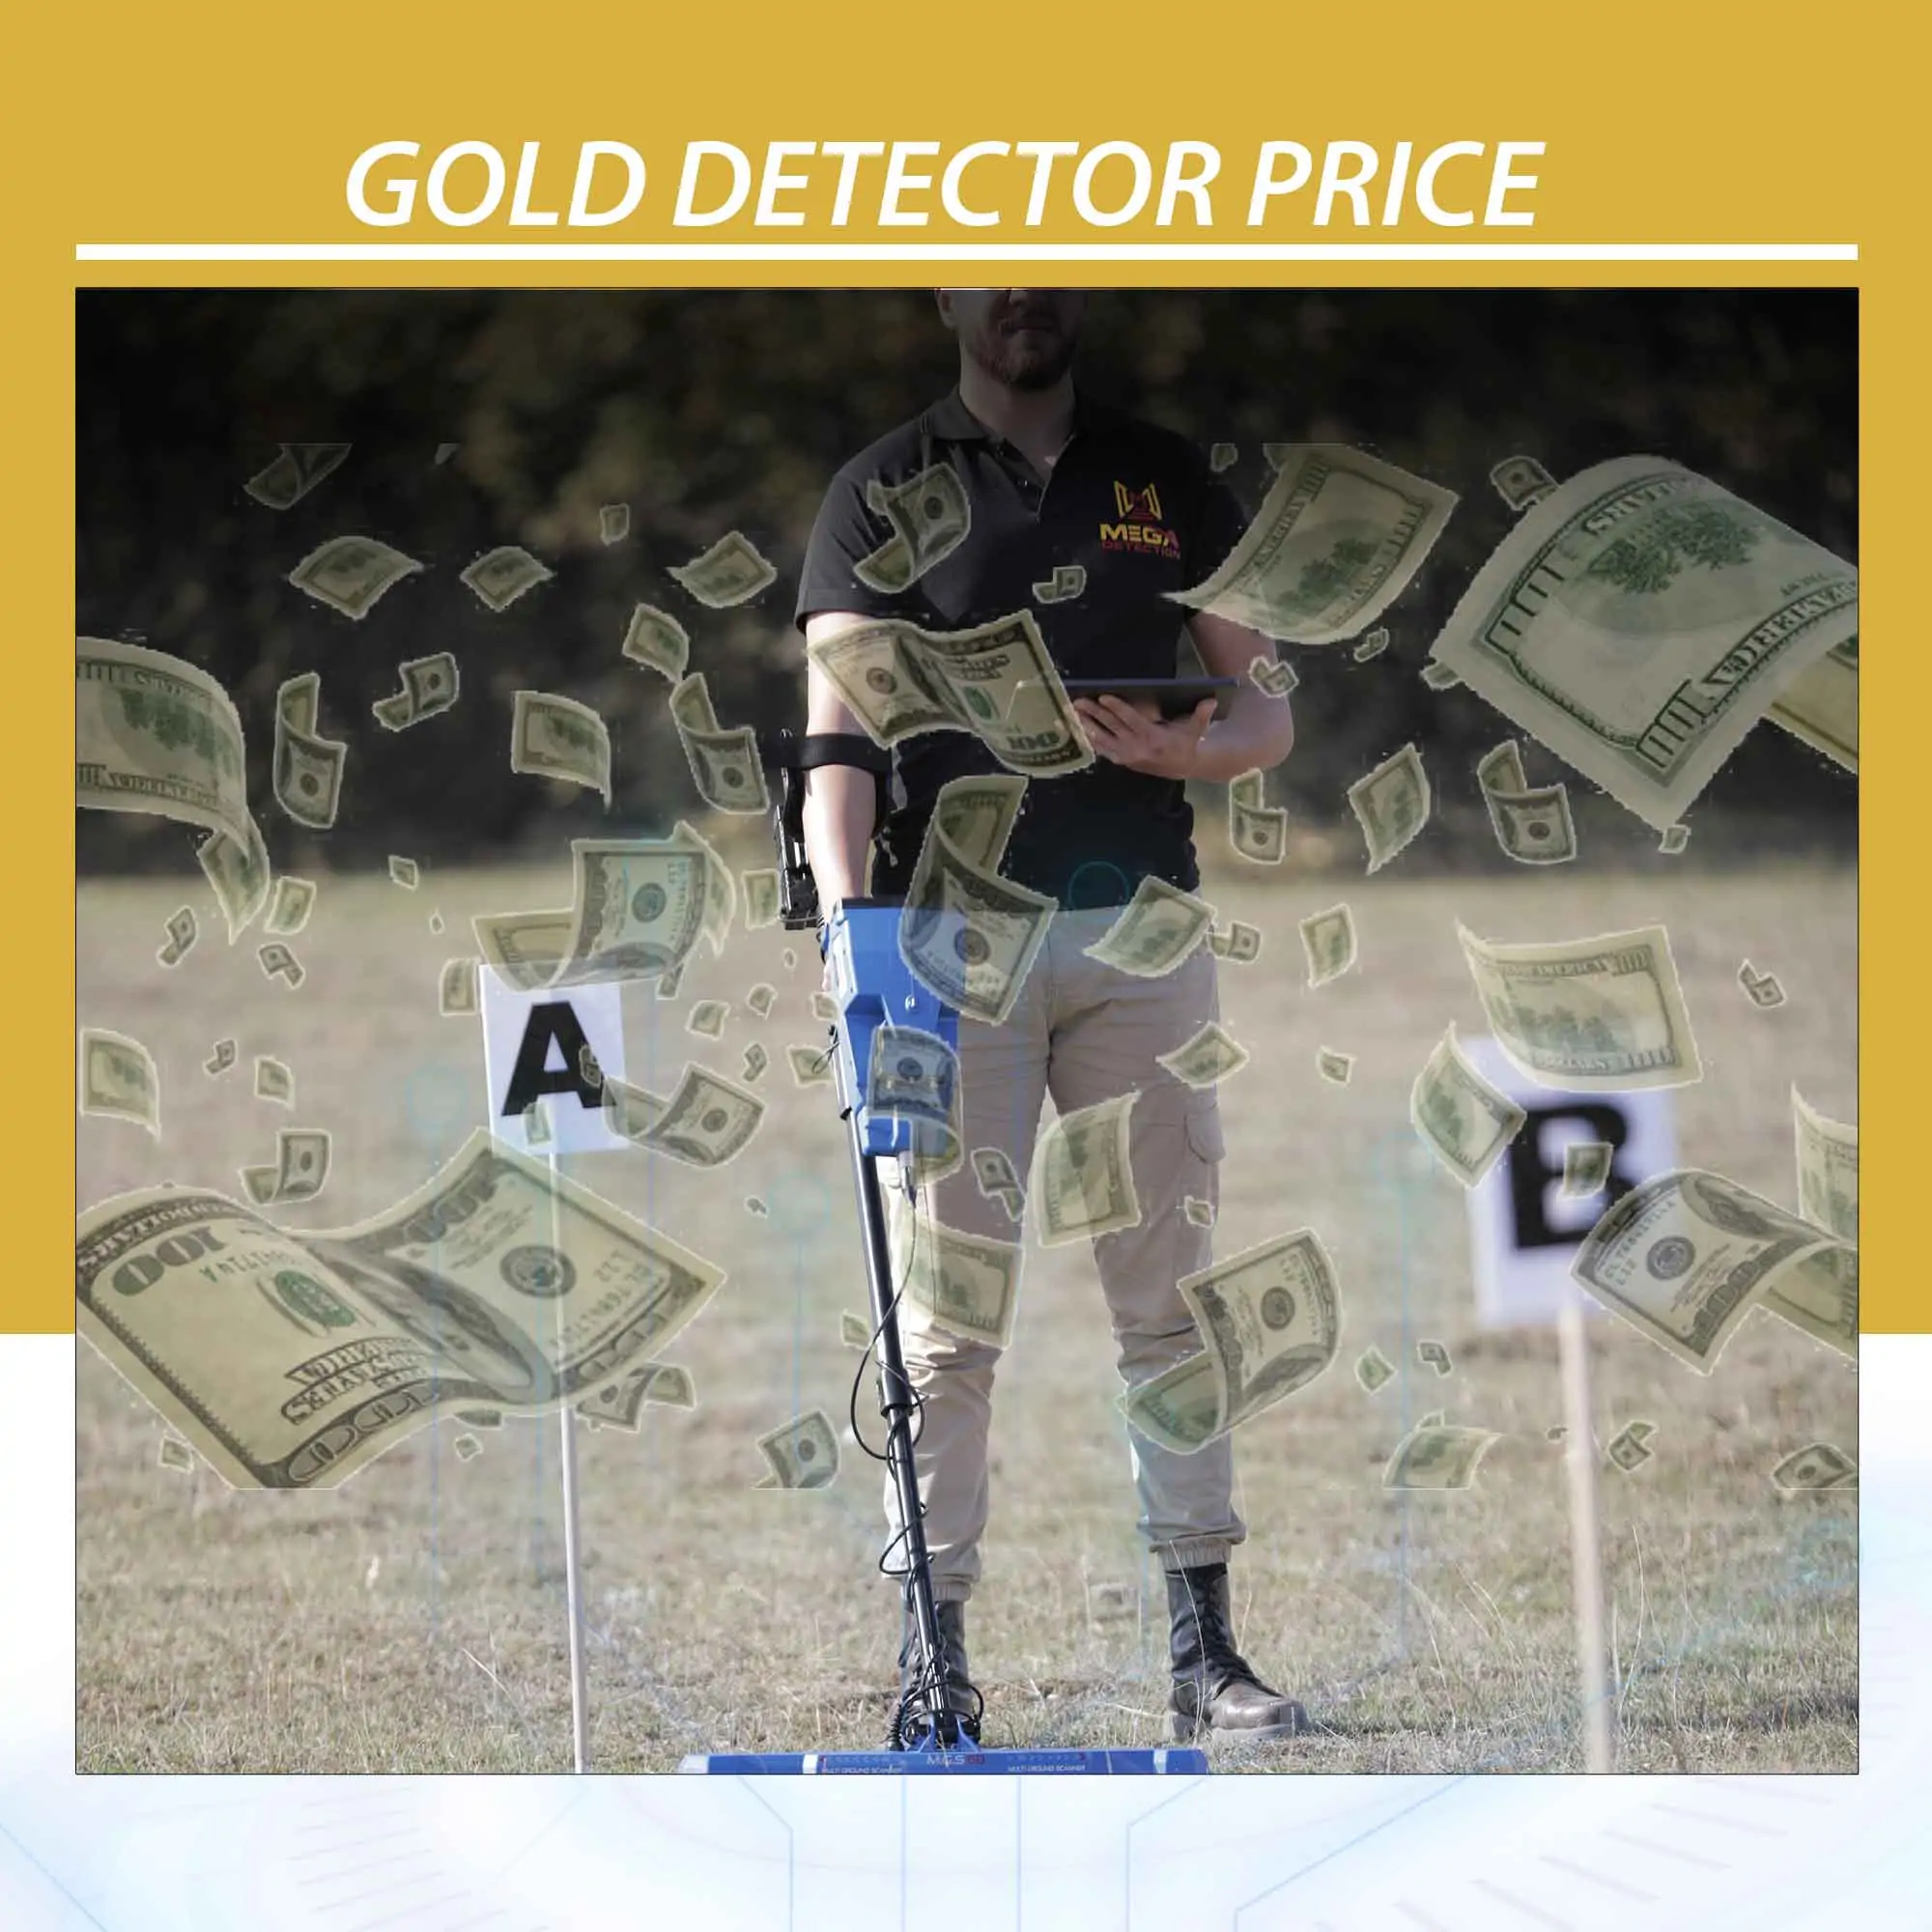 Gold Detector Price